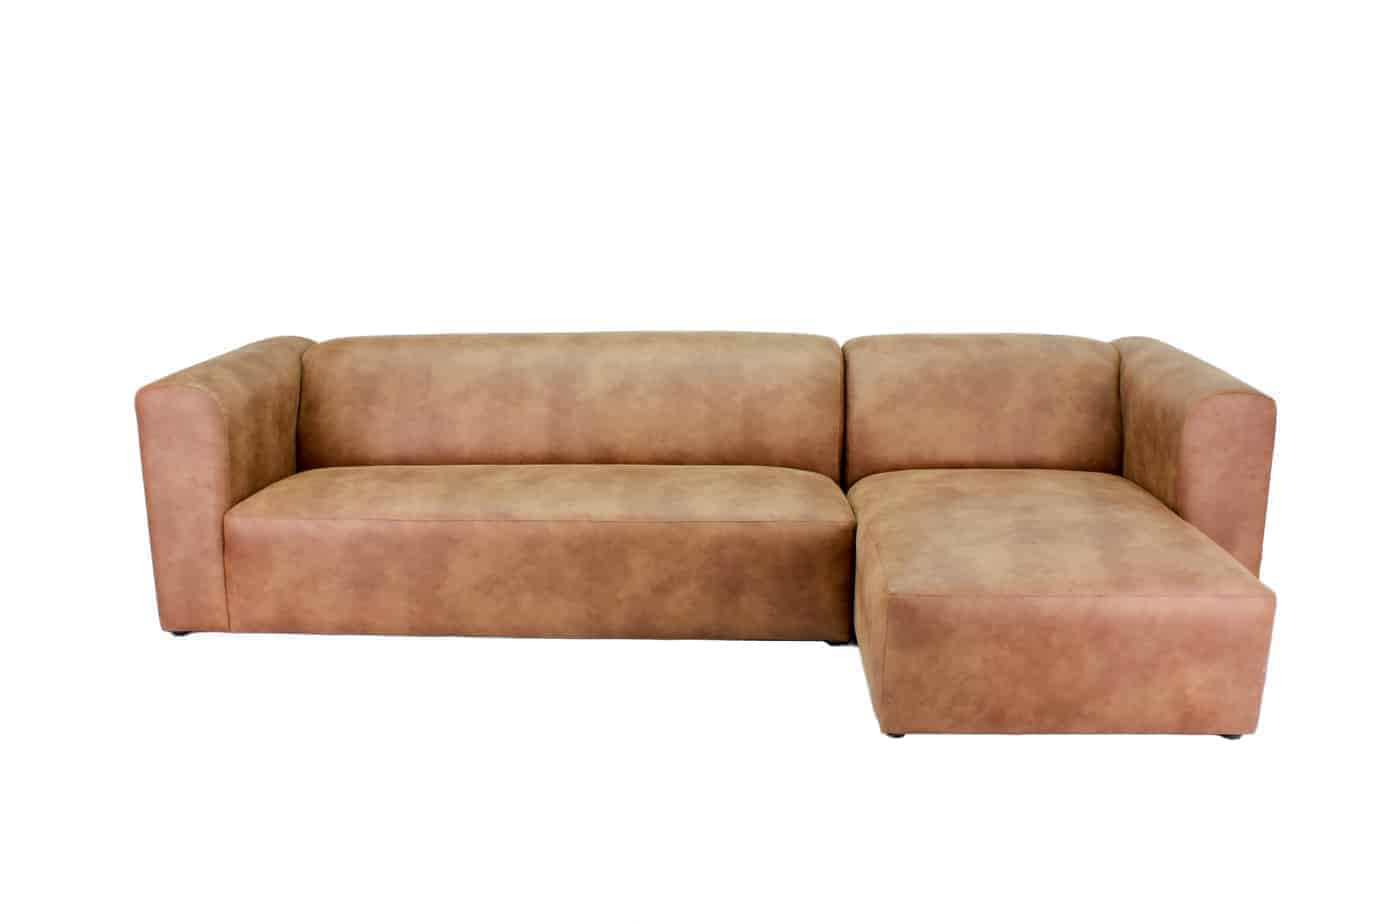 chaise sofa bed perth australia